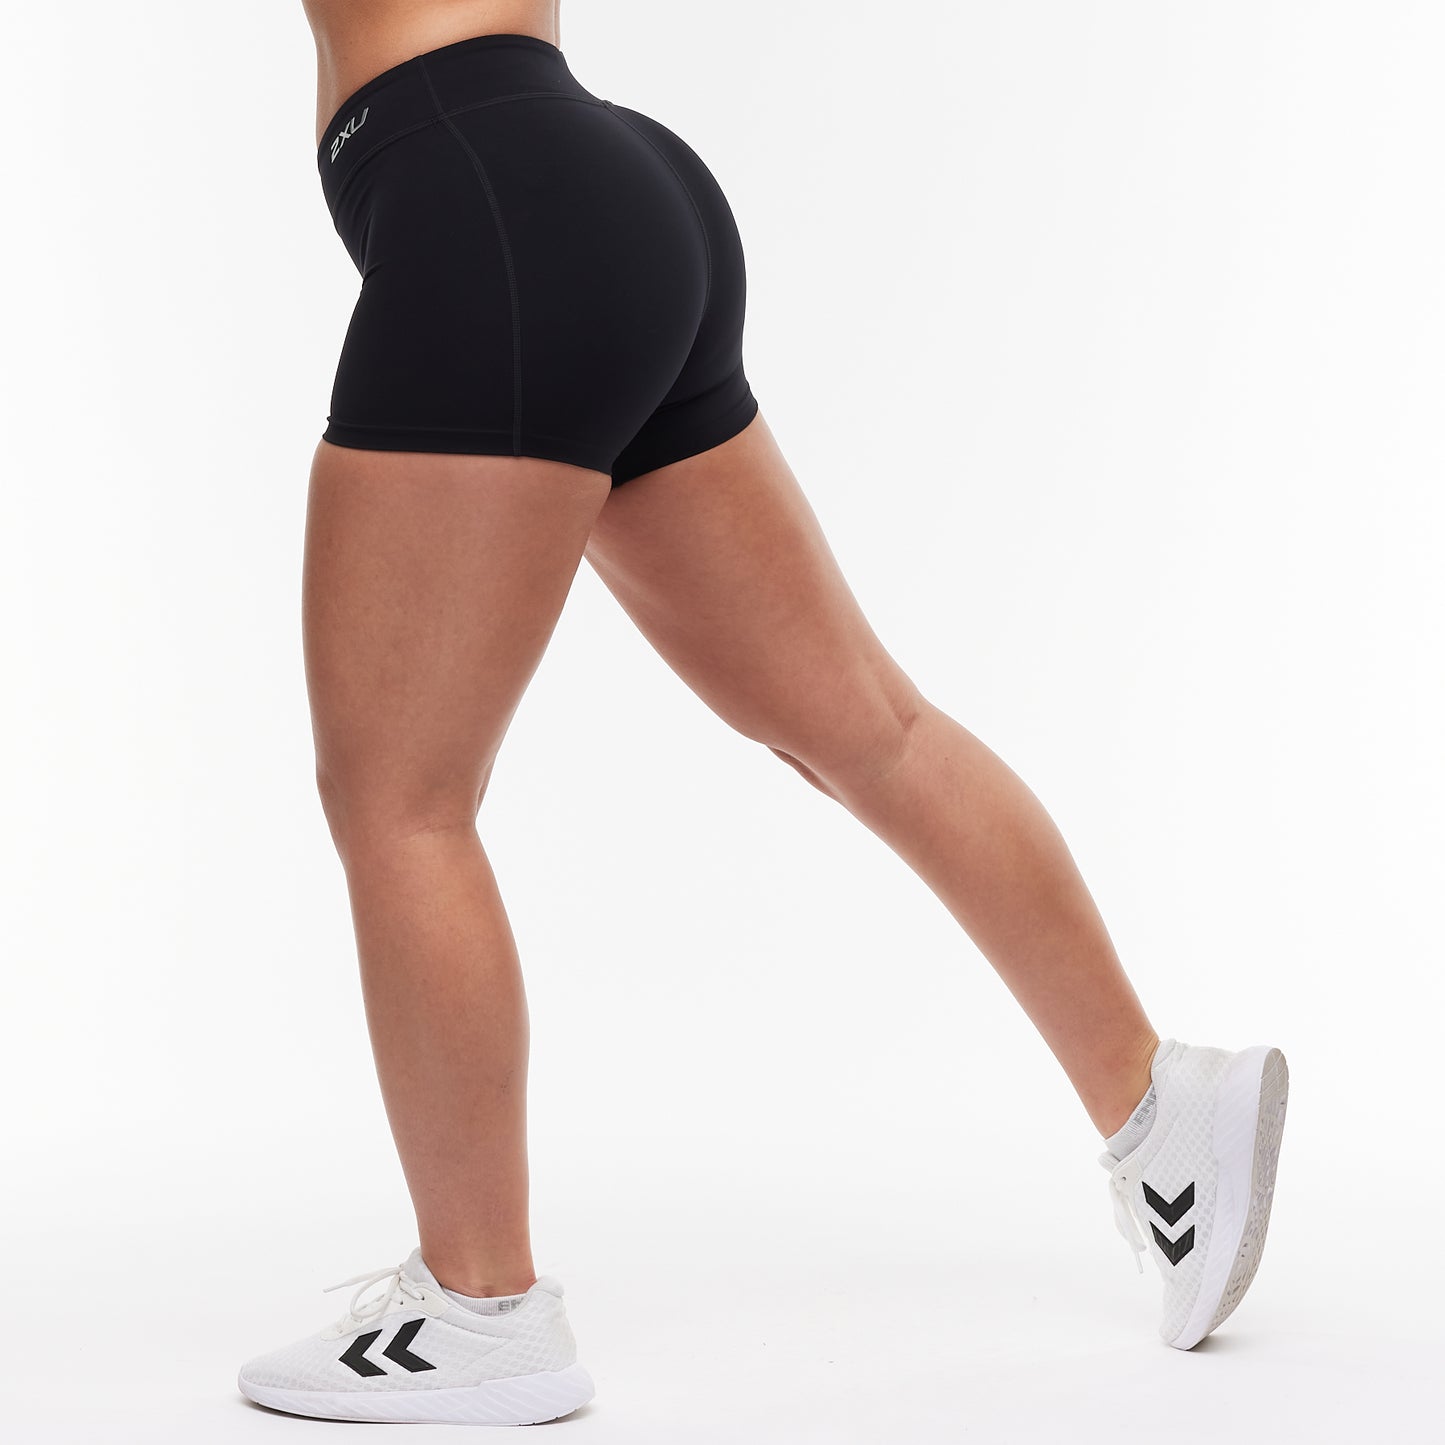 Form Mid-Rise Compression 4 Inch Shorts - Black - for kvinde - 2XU - Shorts